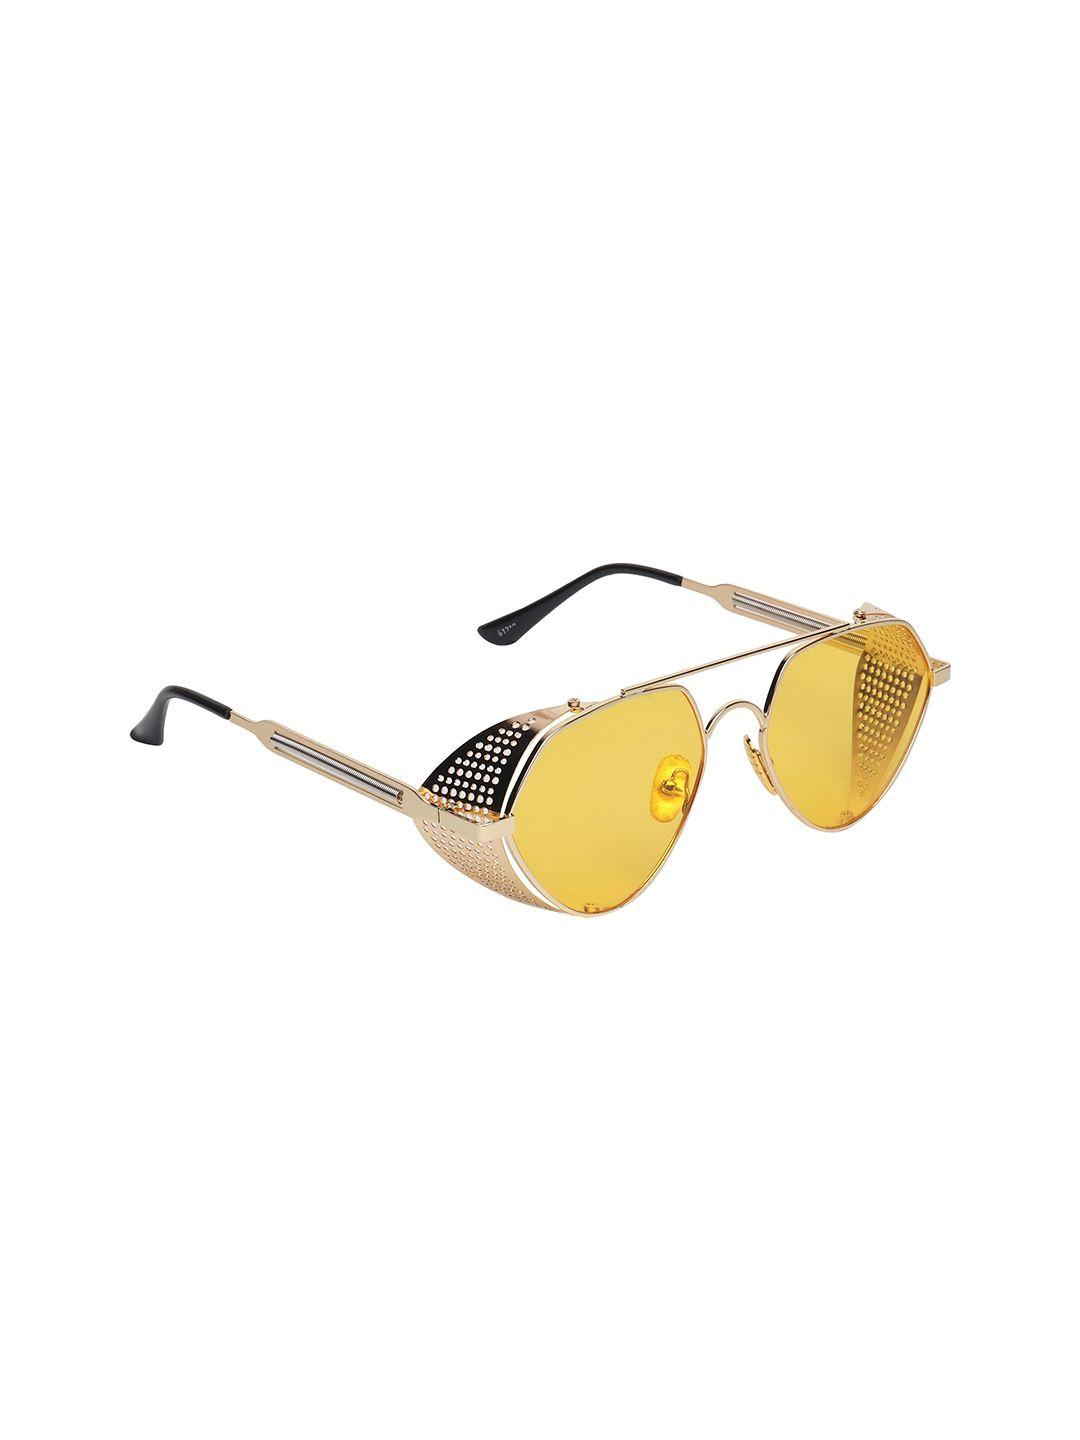 swiss design aviator sunglasses with uv protected lens